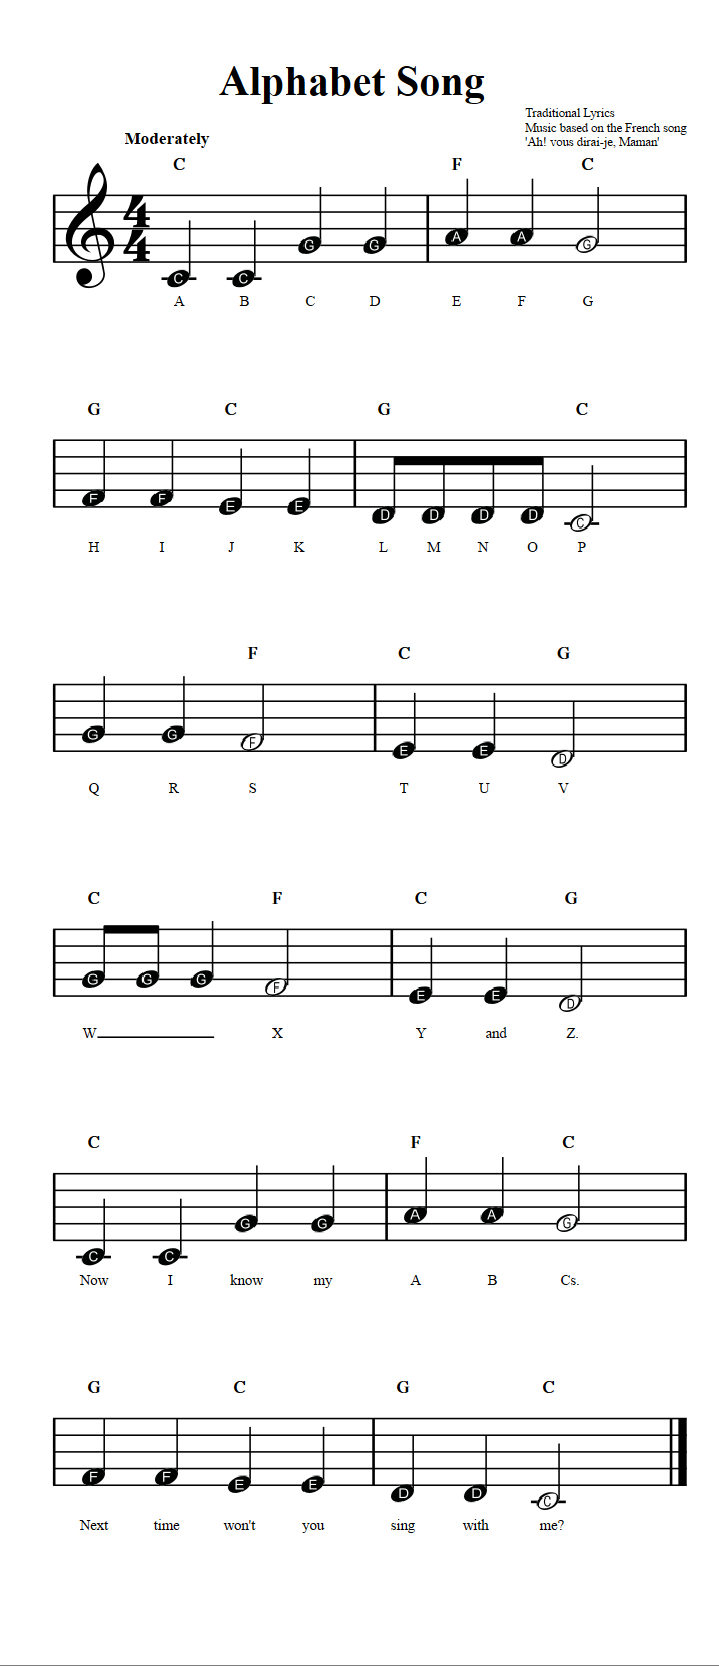 Alphabet Song: Beginner Sheet Music with Chords and Lyrics